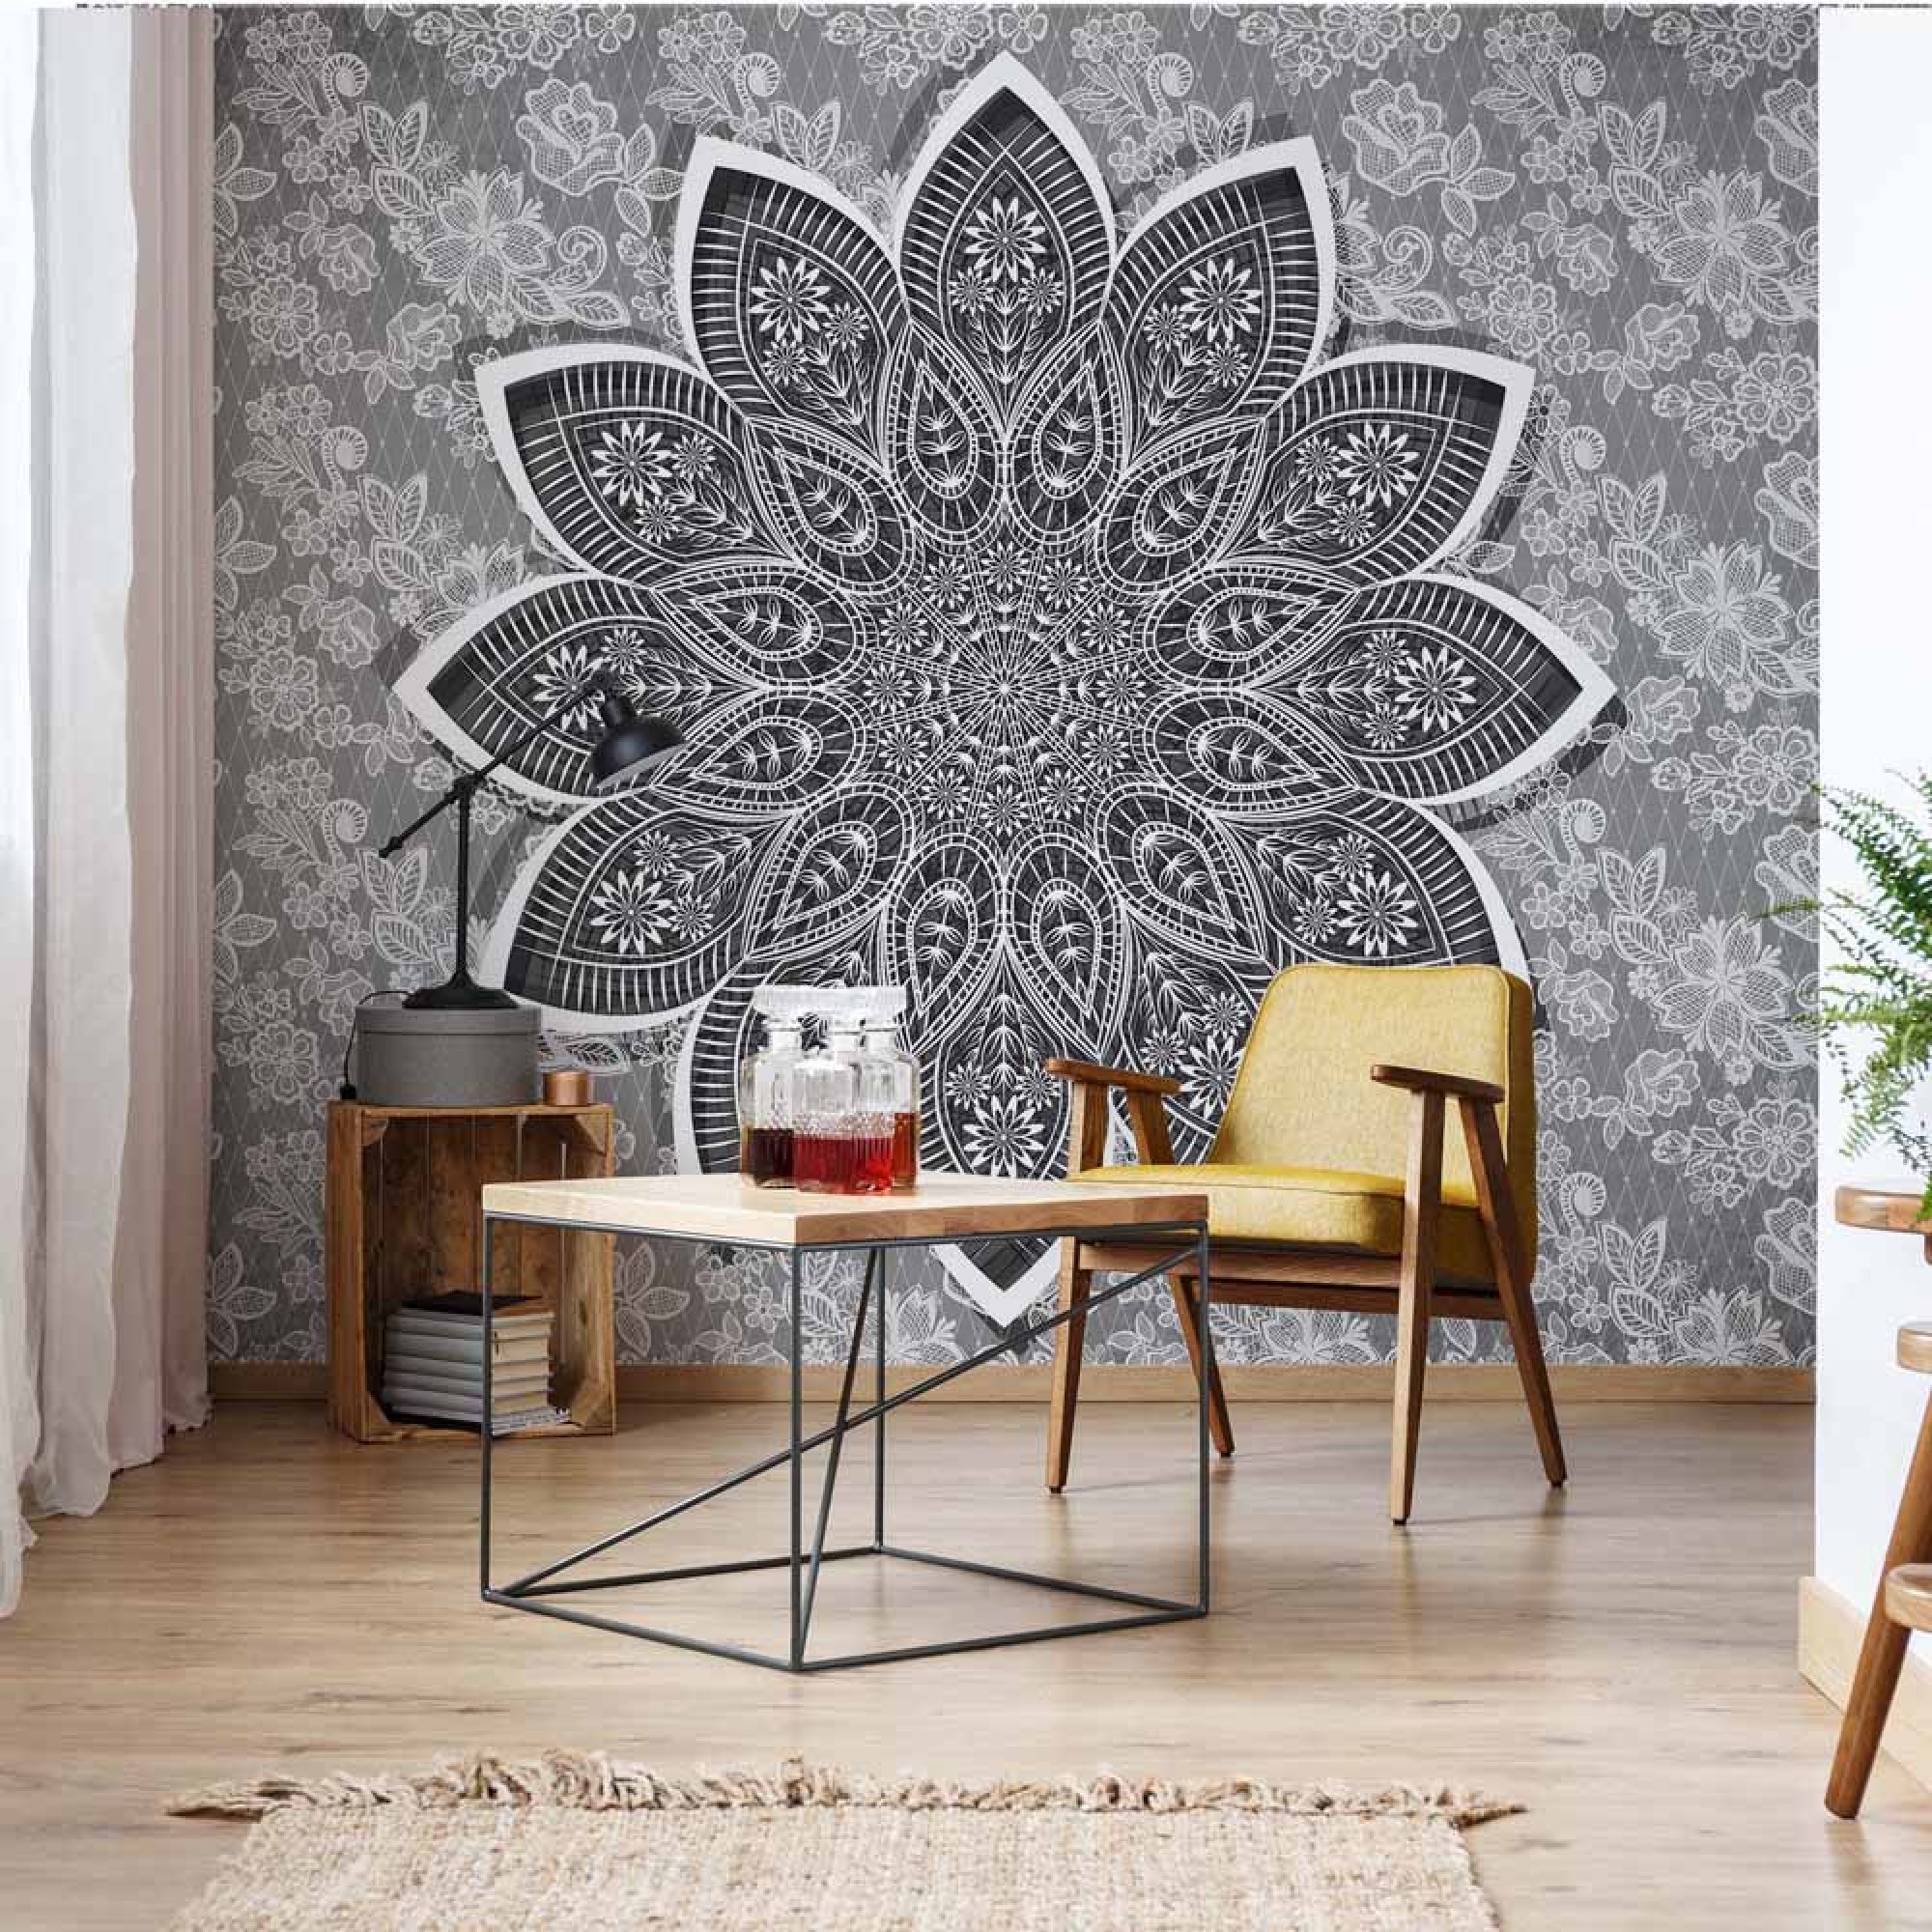 Mandala Grey And White - Texture Concrete Wall Design - HD Wallpaper 